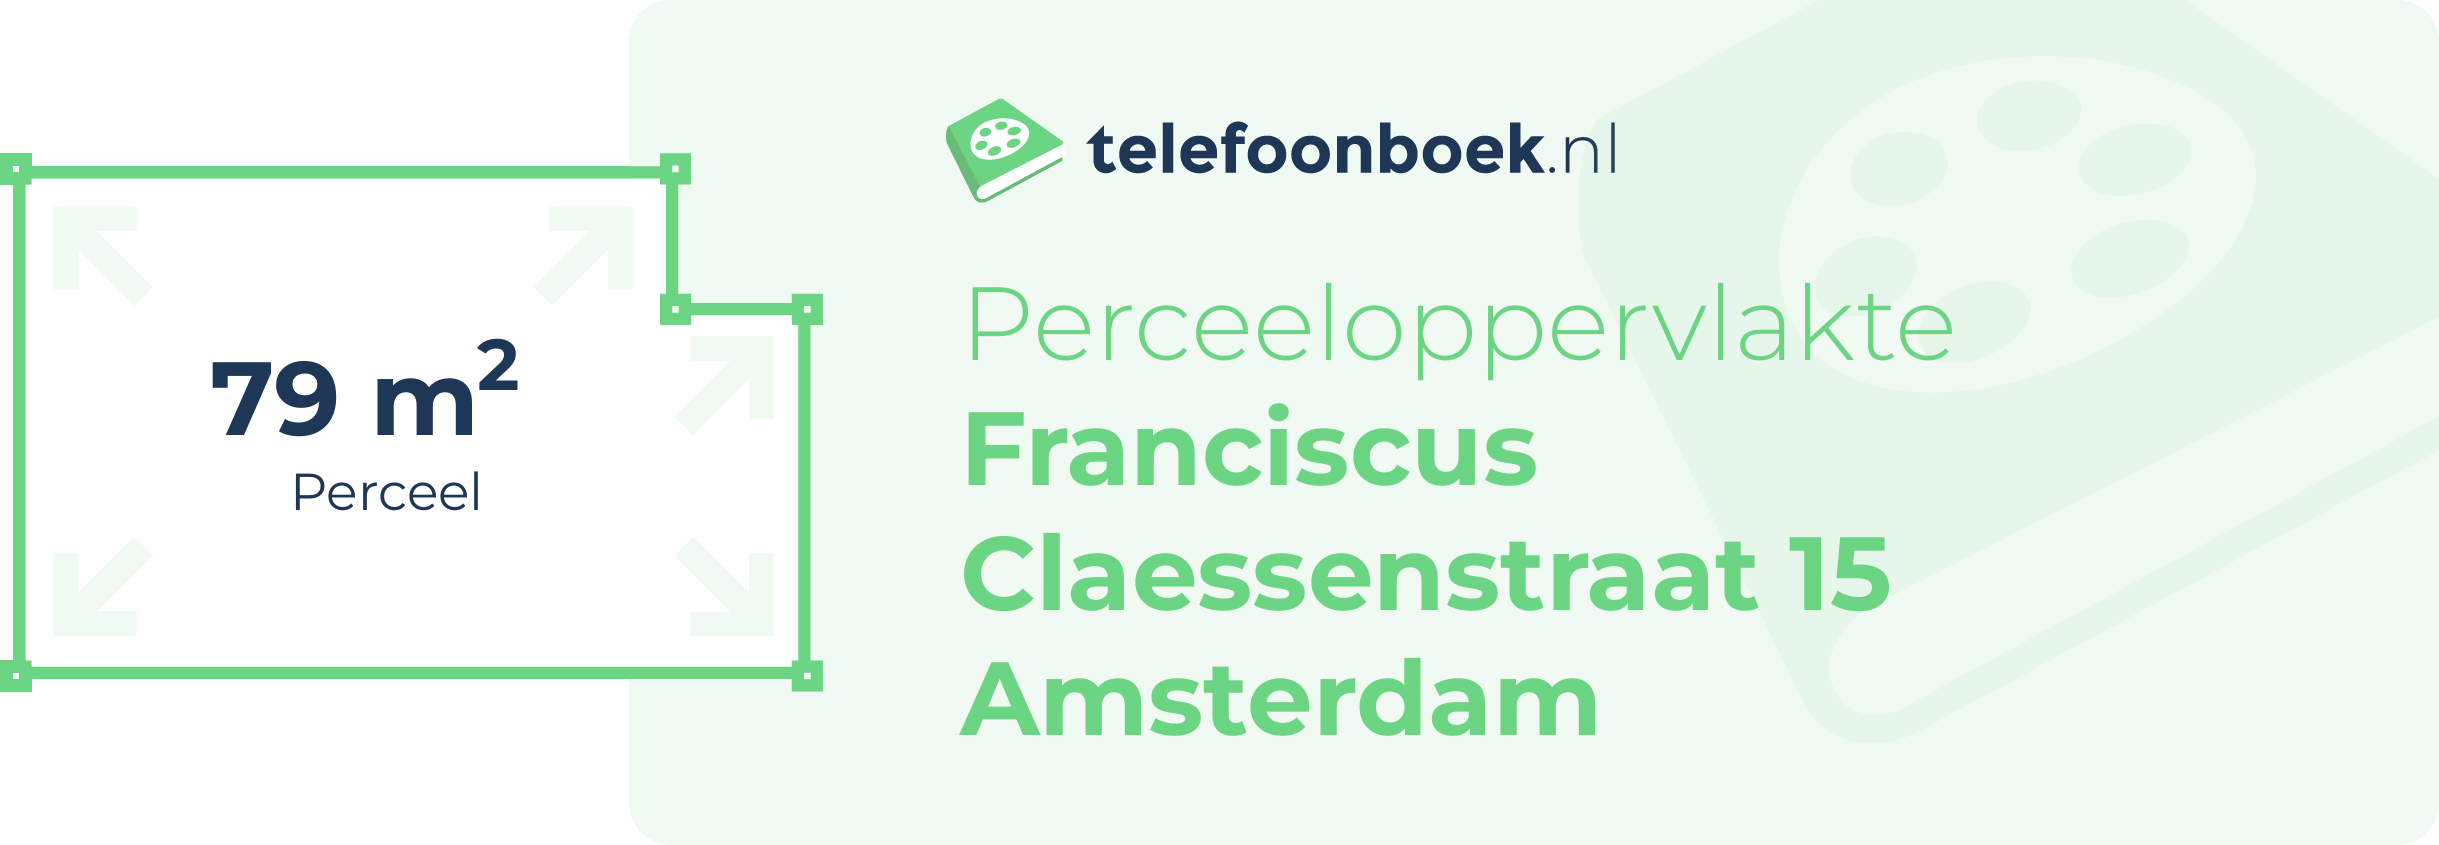 Perceeloppervlakte Franciscus Claessenstraat 15 Amsterdam